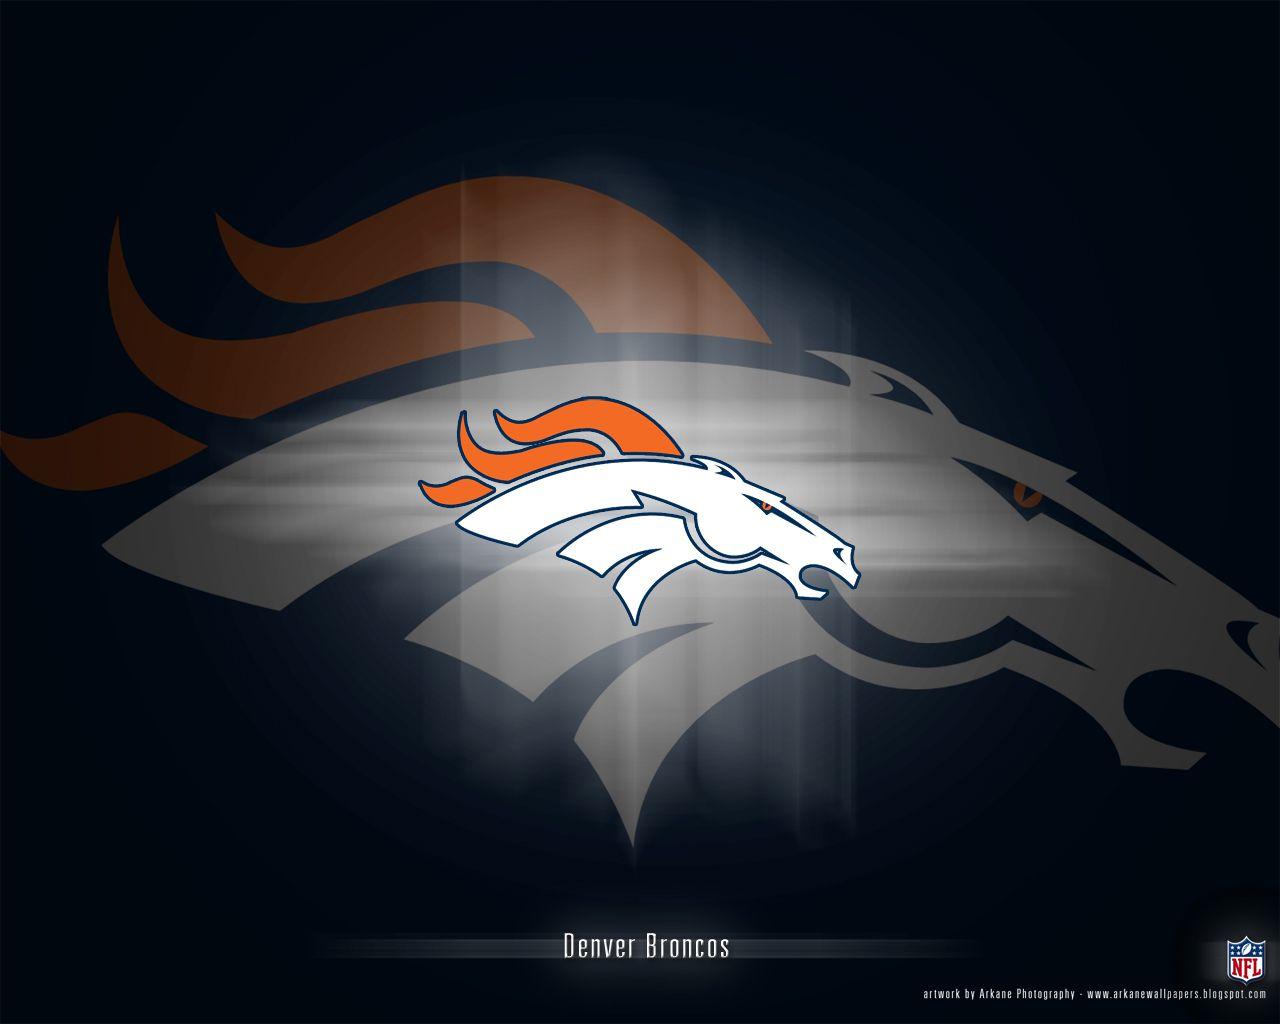 Denver Broncos Picture Wallpaper